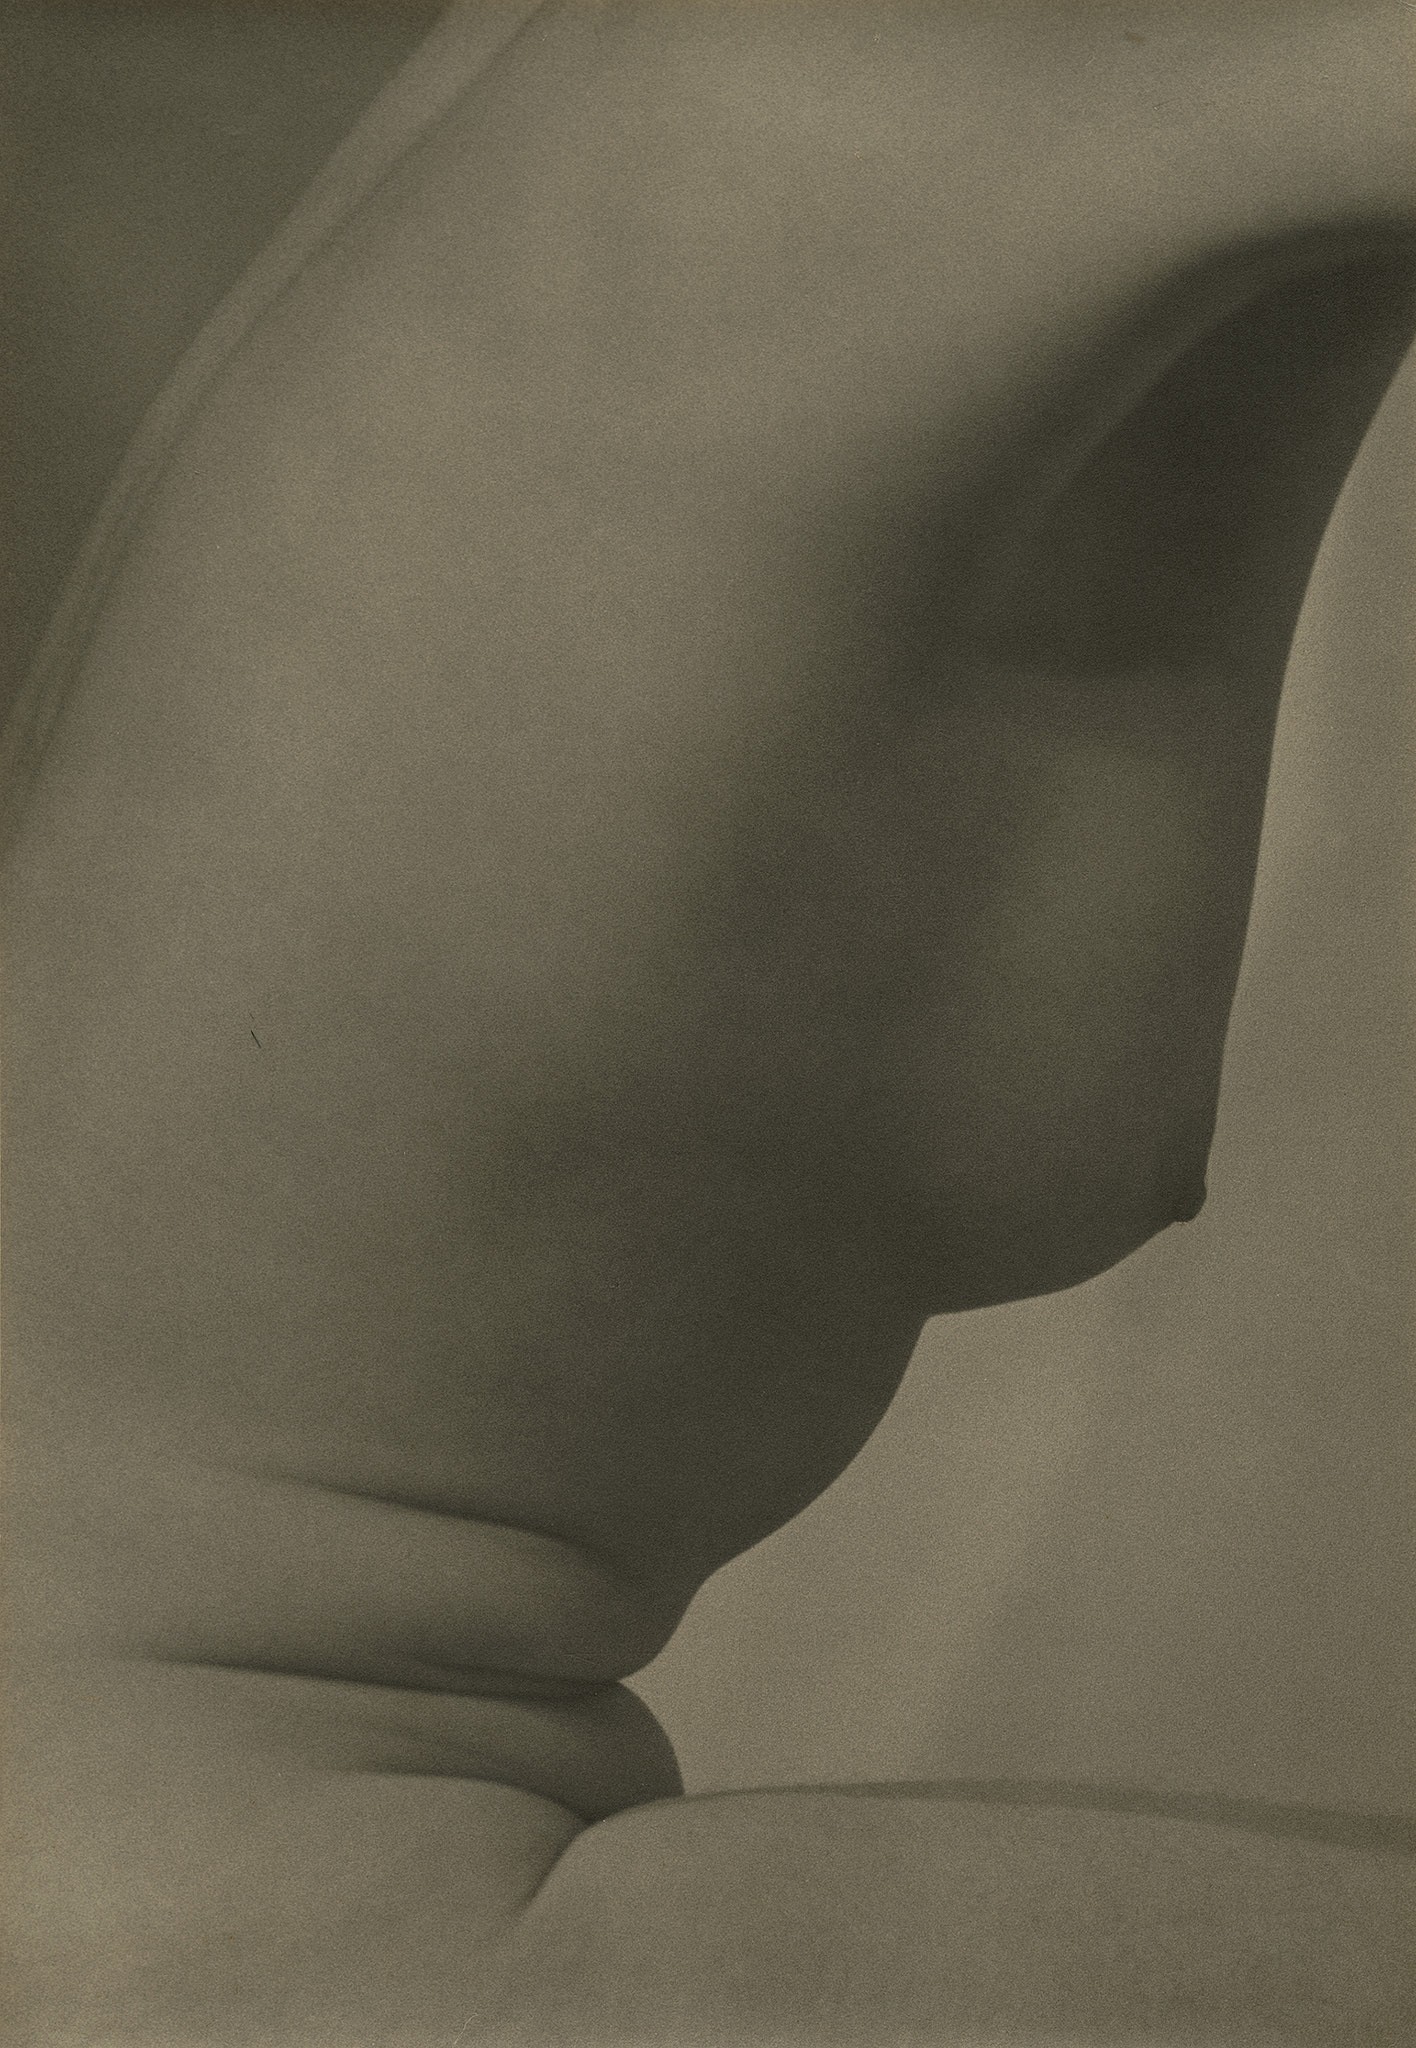 Yvonne Chevalier :: Nu, 1929 Vintage gelatin silver print. from: Hommage à Christian Bouqueret | src Gitterman Gallery
female nude
nude torso